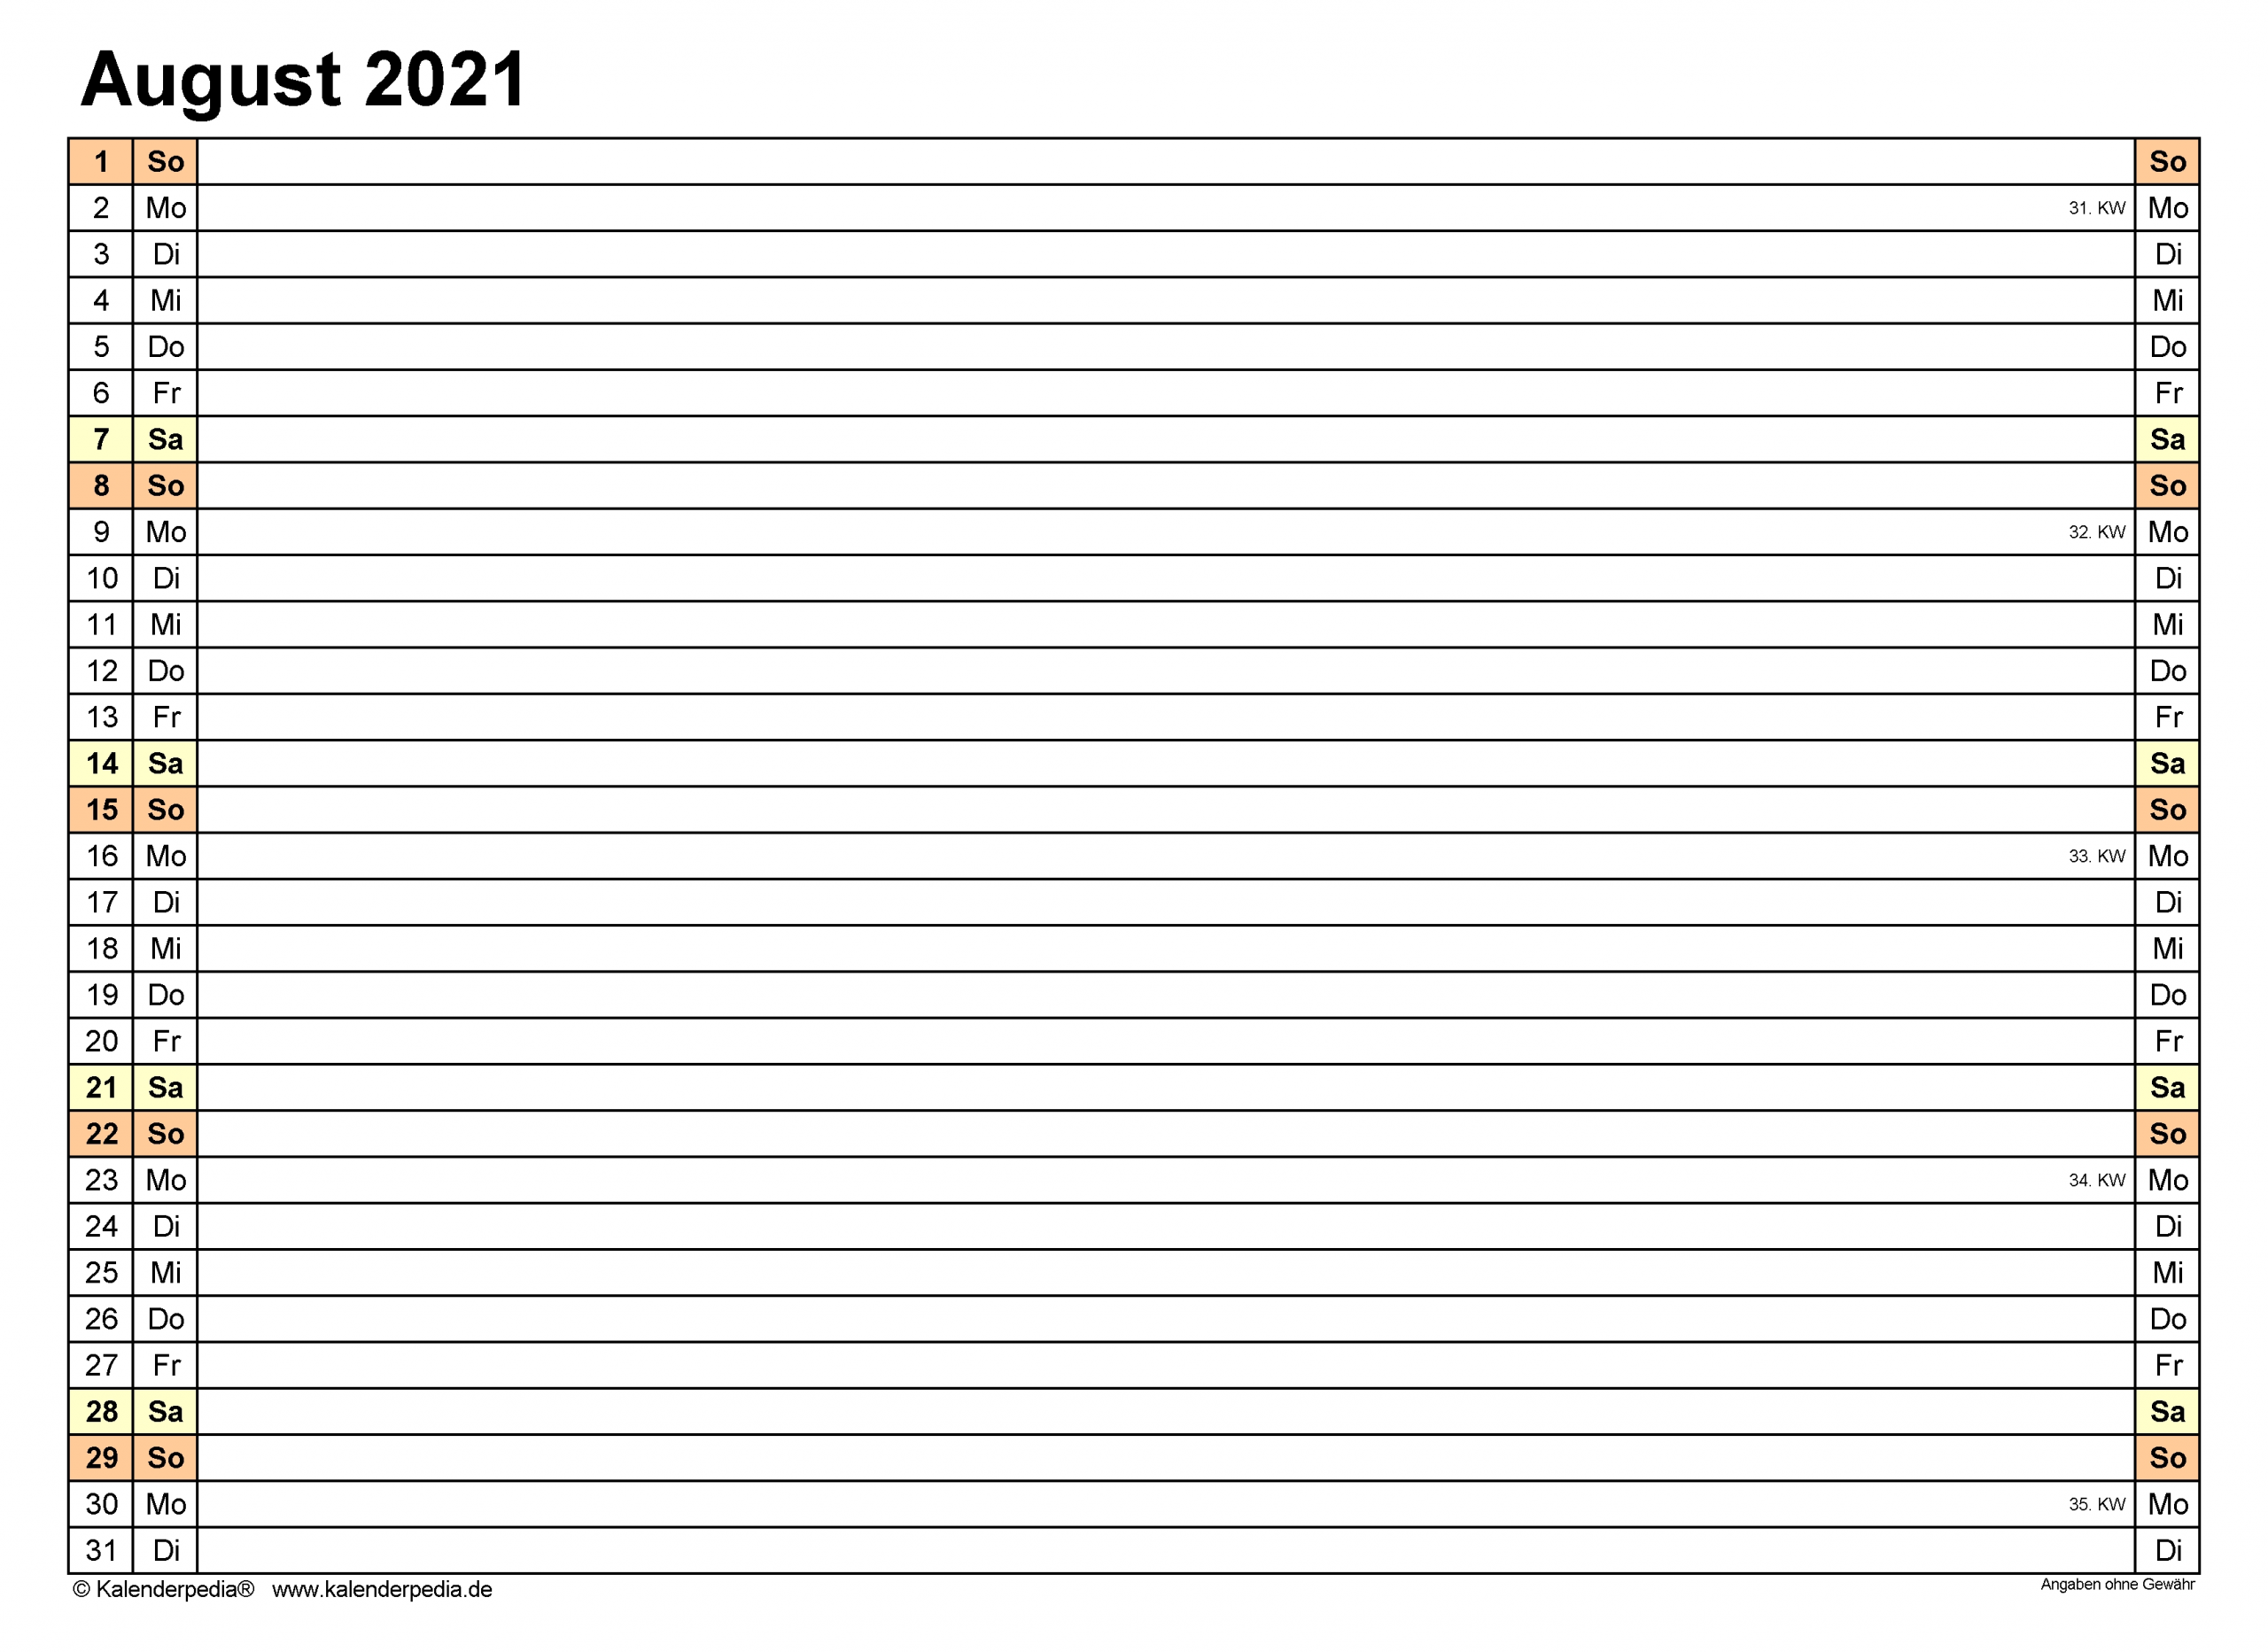 Kalenderblatt 2021 - Catch Kalenderblatt August 2021 Zum ...